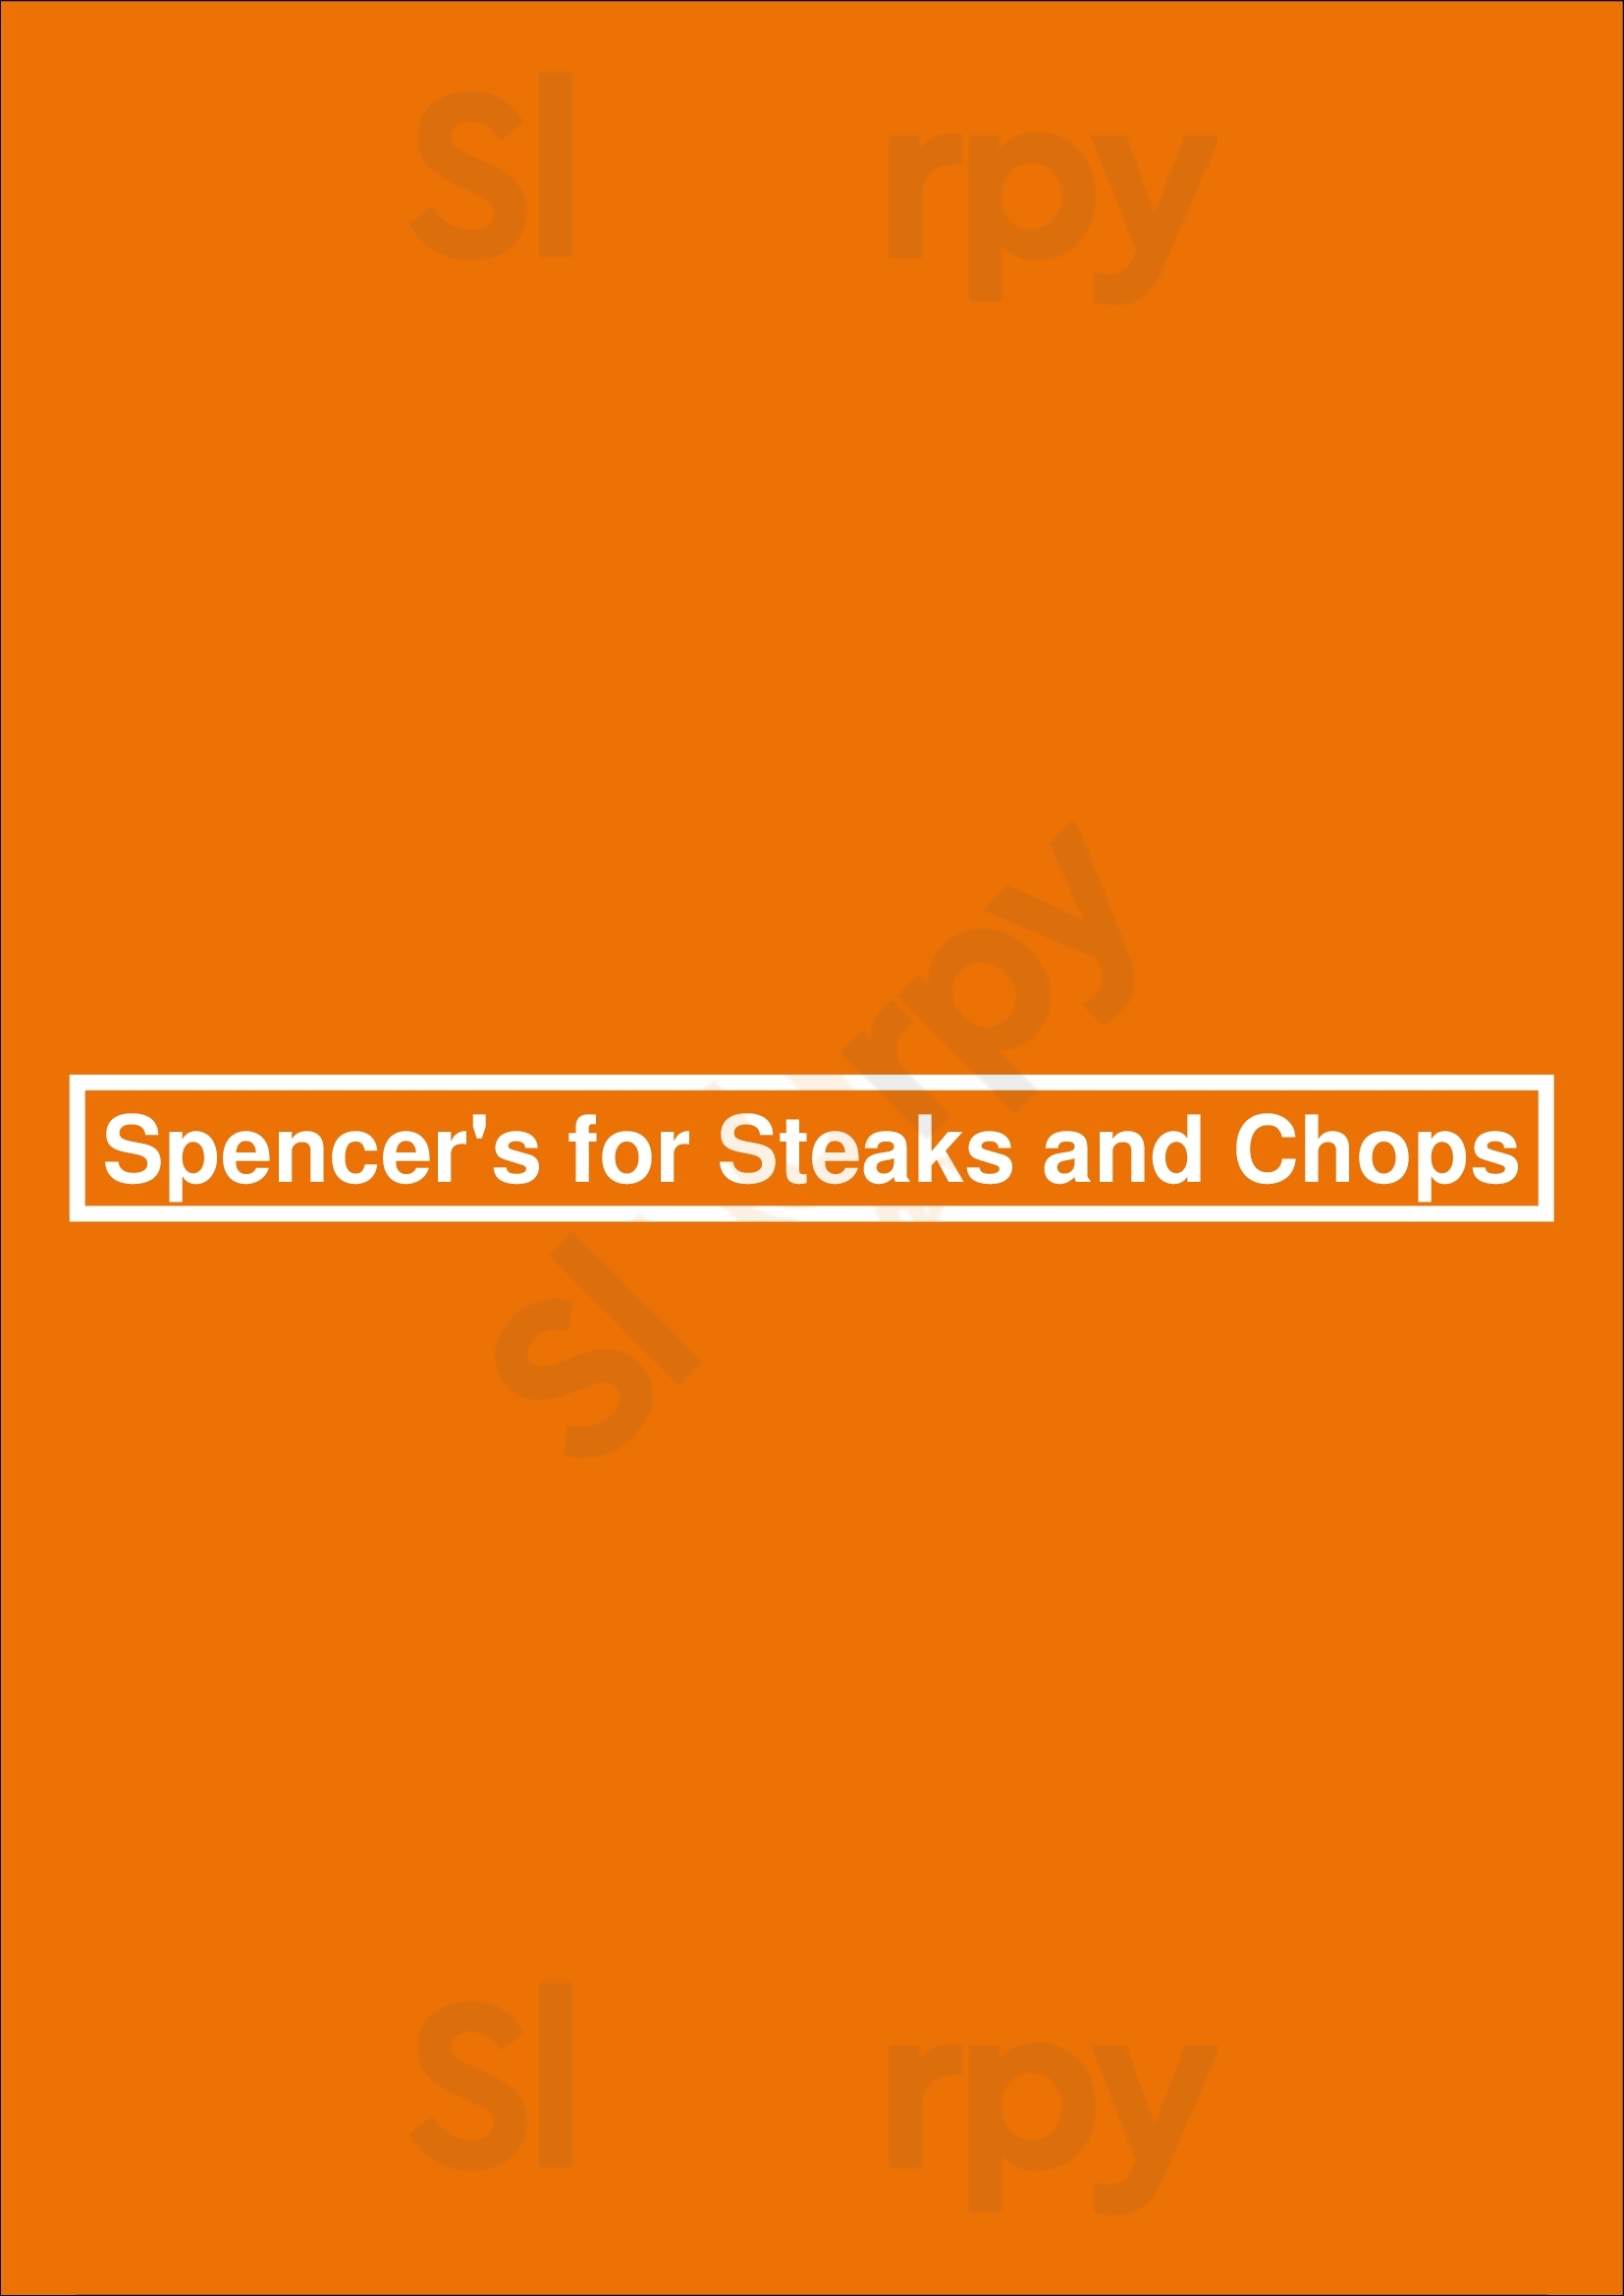 Spencer's For Steaks & Chops Spokane Menu - 1